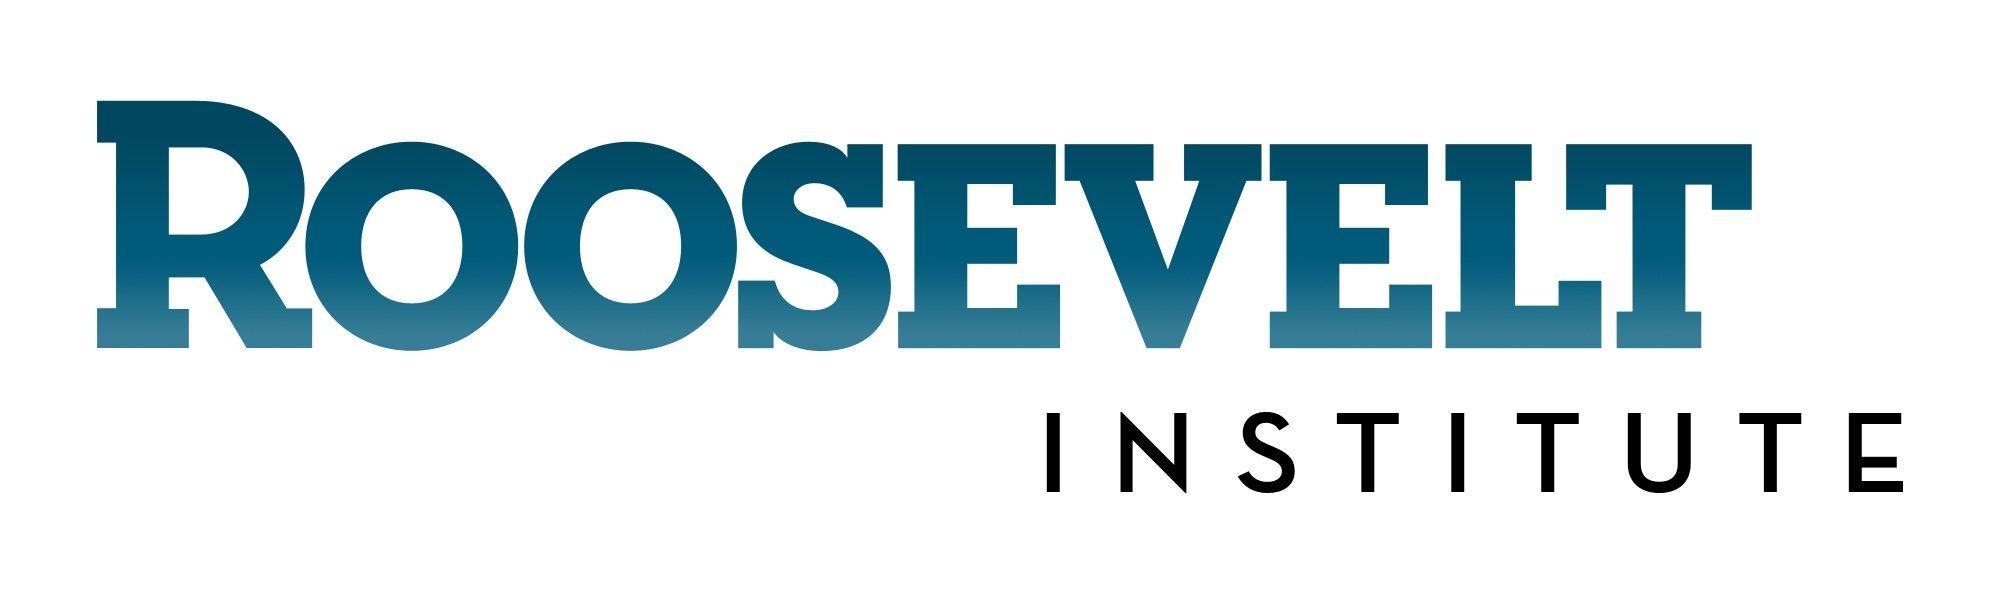 Roosevelt Logo - Roosevelt Institute